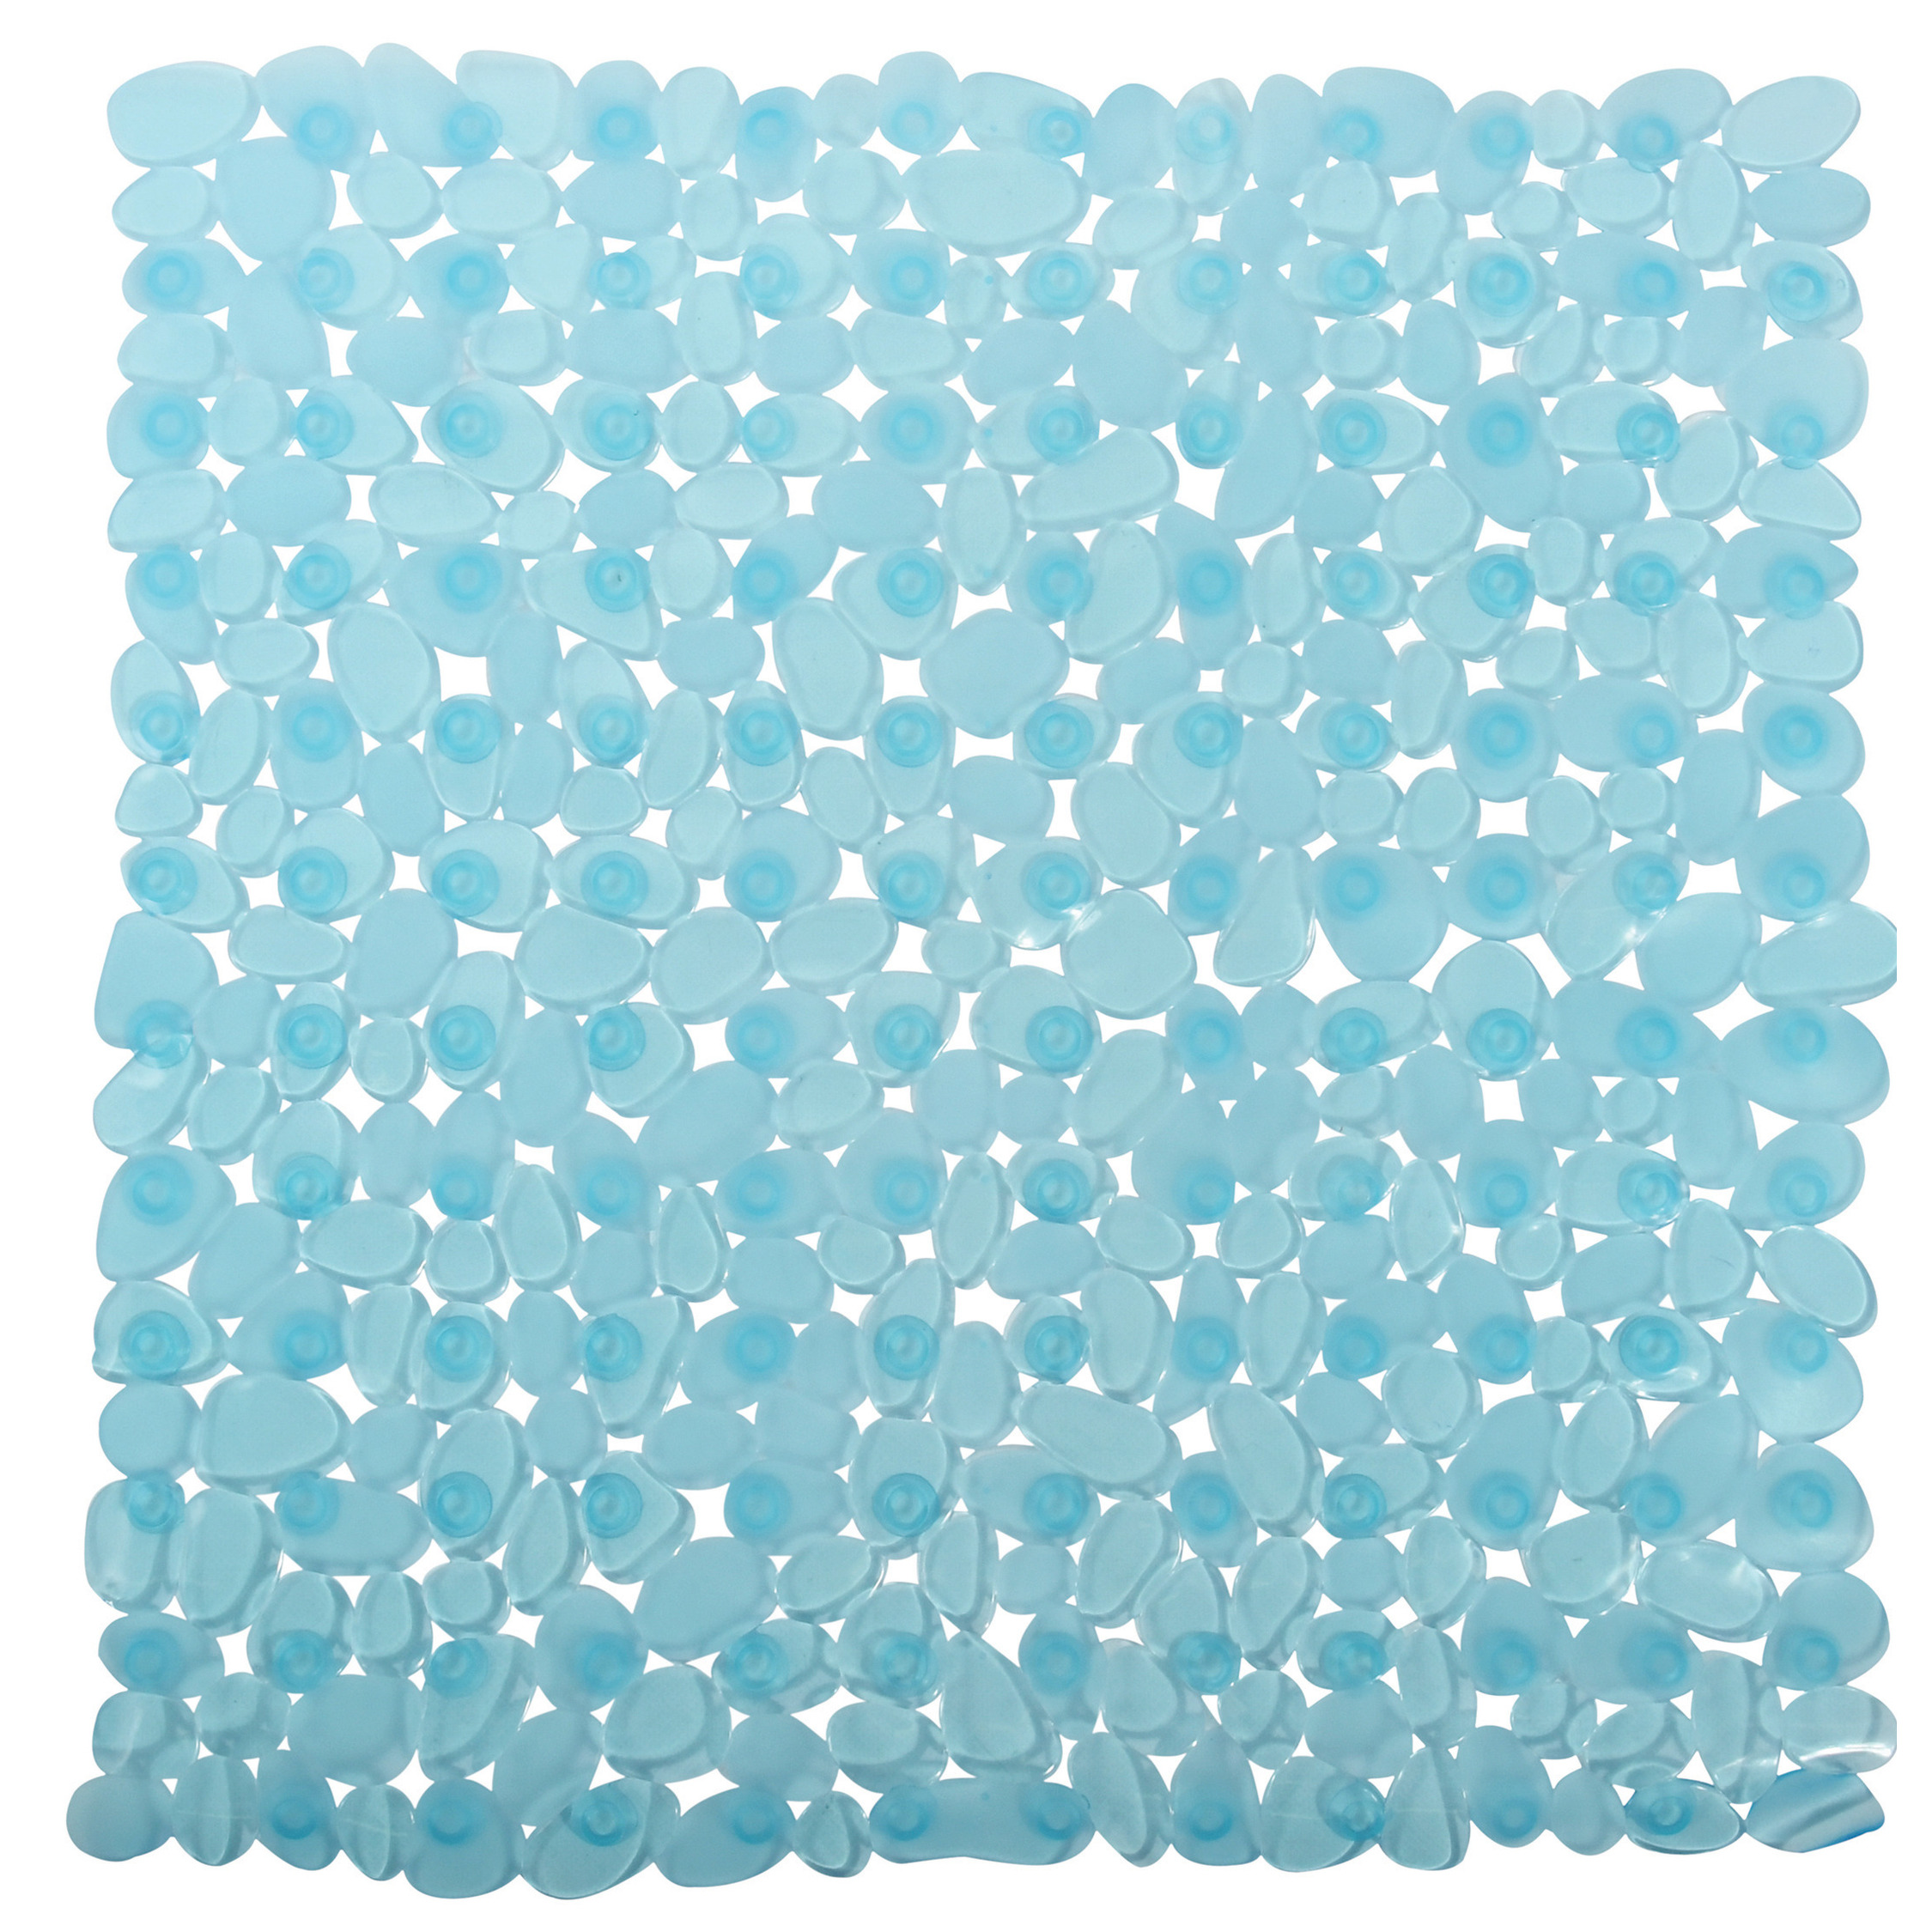 Douche-bad anti-slip mat badkamer pvc aqua blauw 53 x 53 cm vierkant